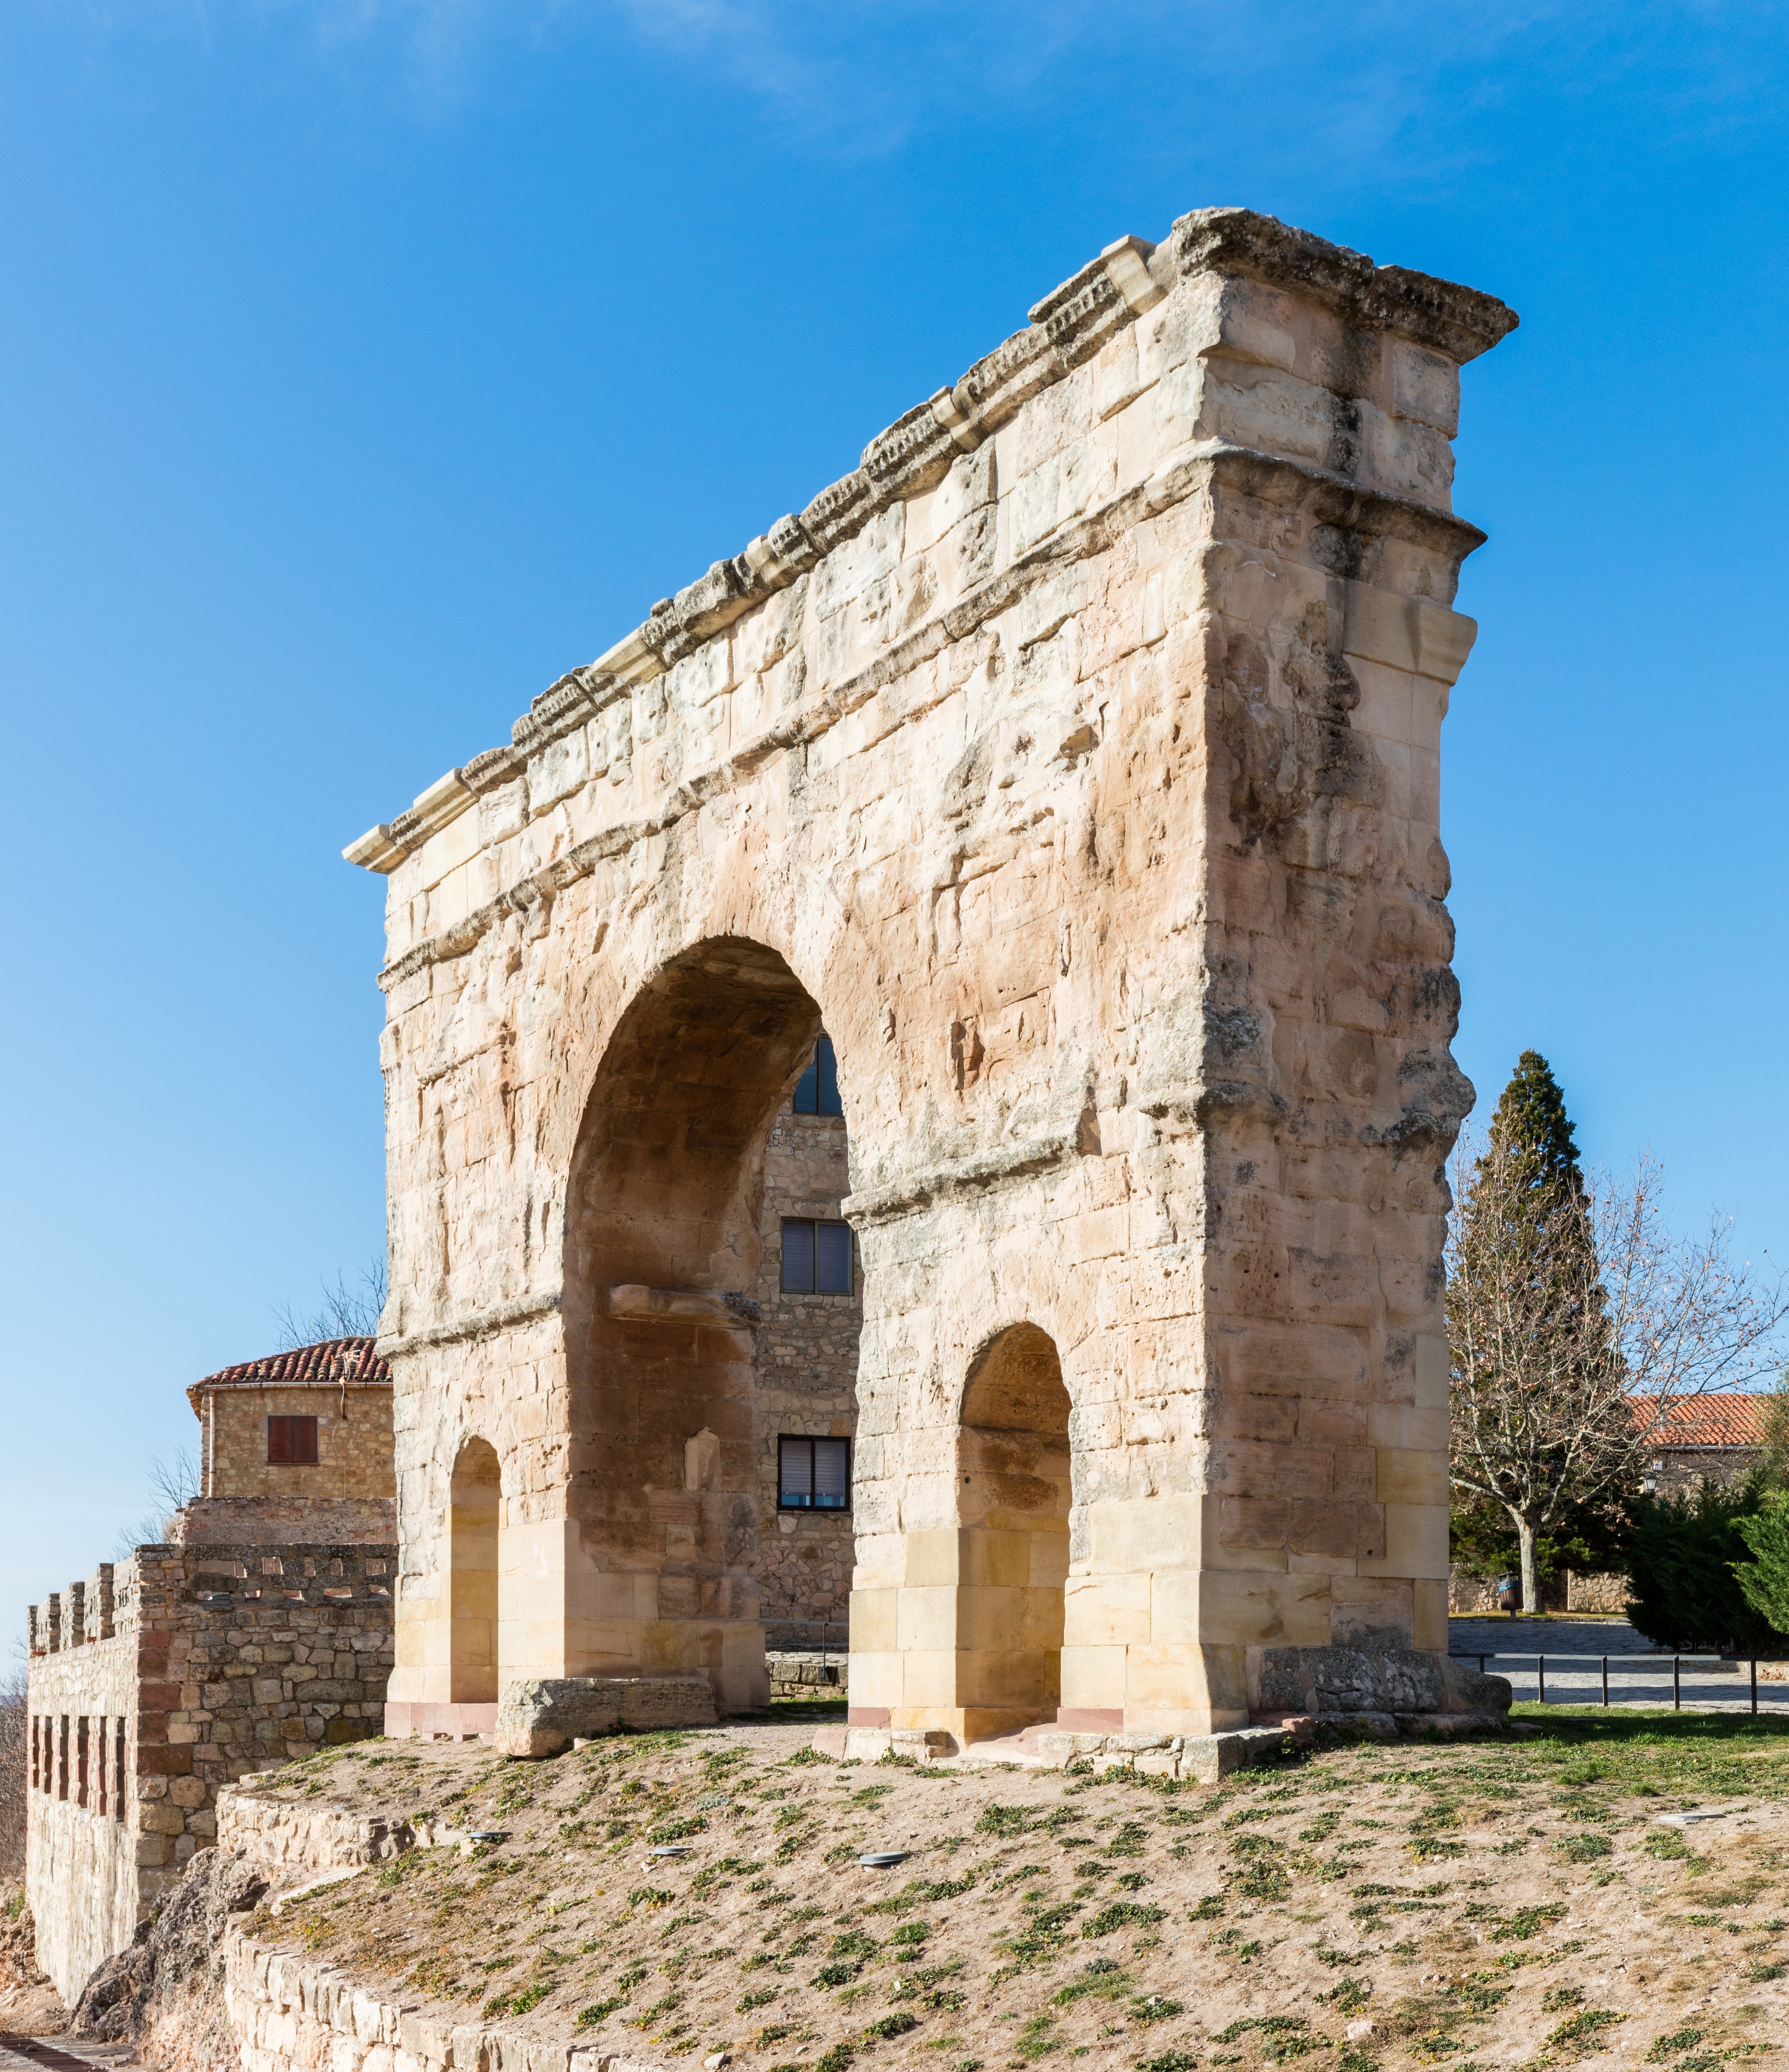 Arco romano, Medinaceli, Soria, España, 2015-12-28, DD 104